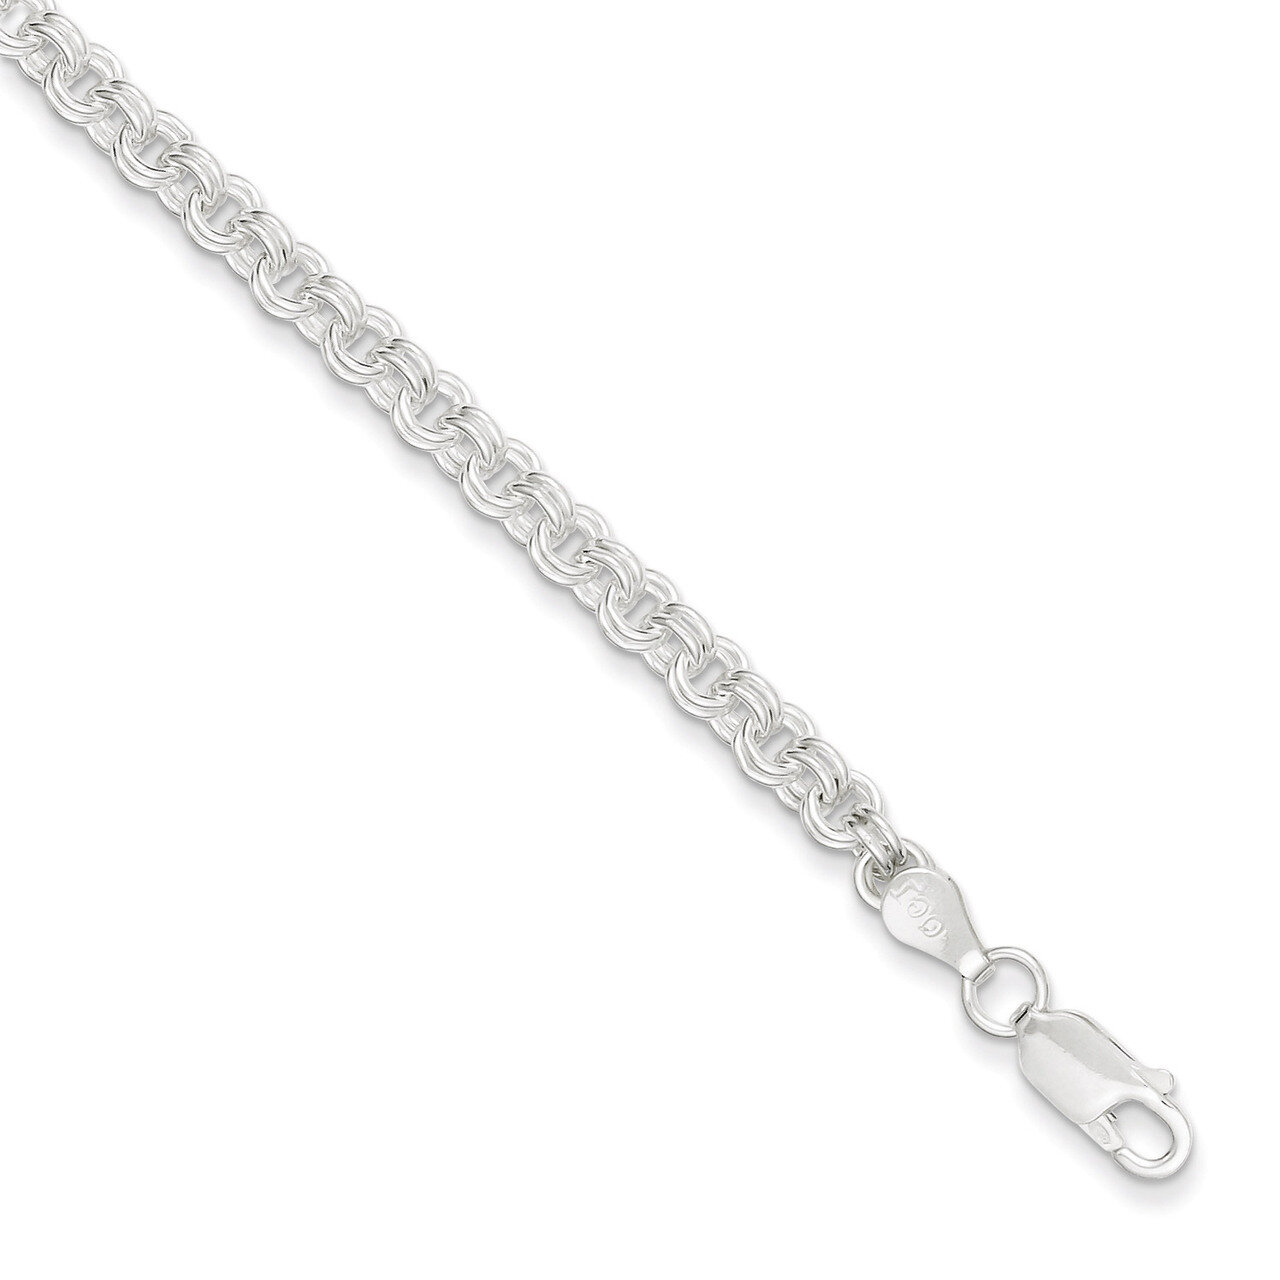 7 Inch 4mm Double Link Charm Bracelet Sterling Silver QG2201-7